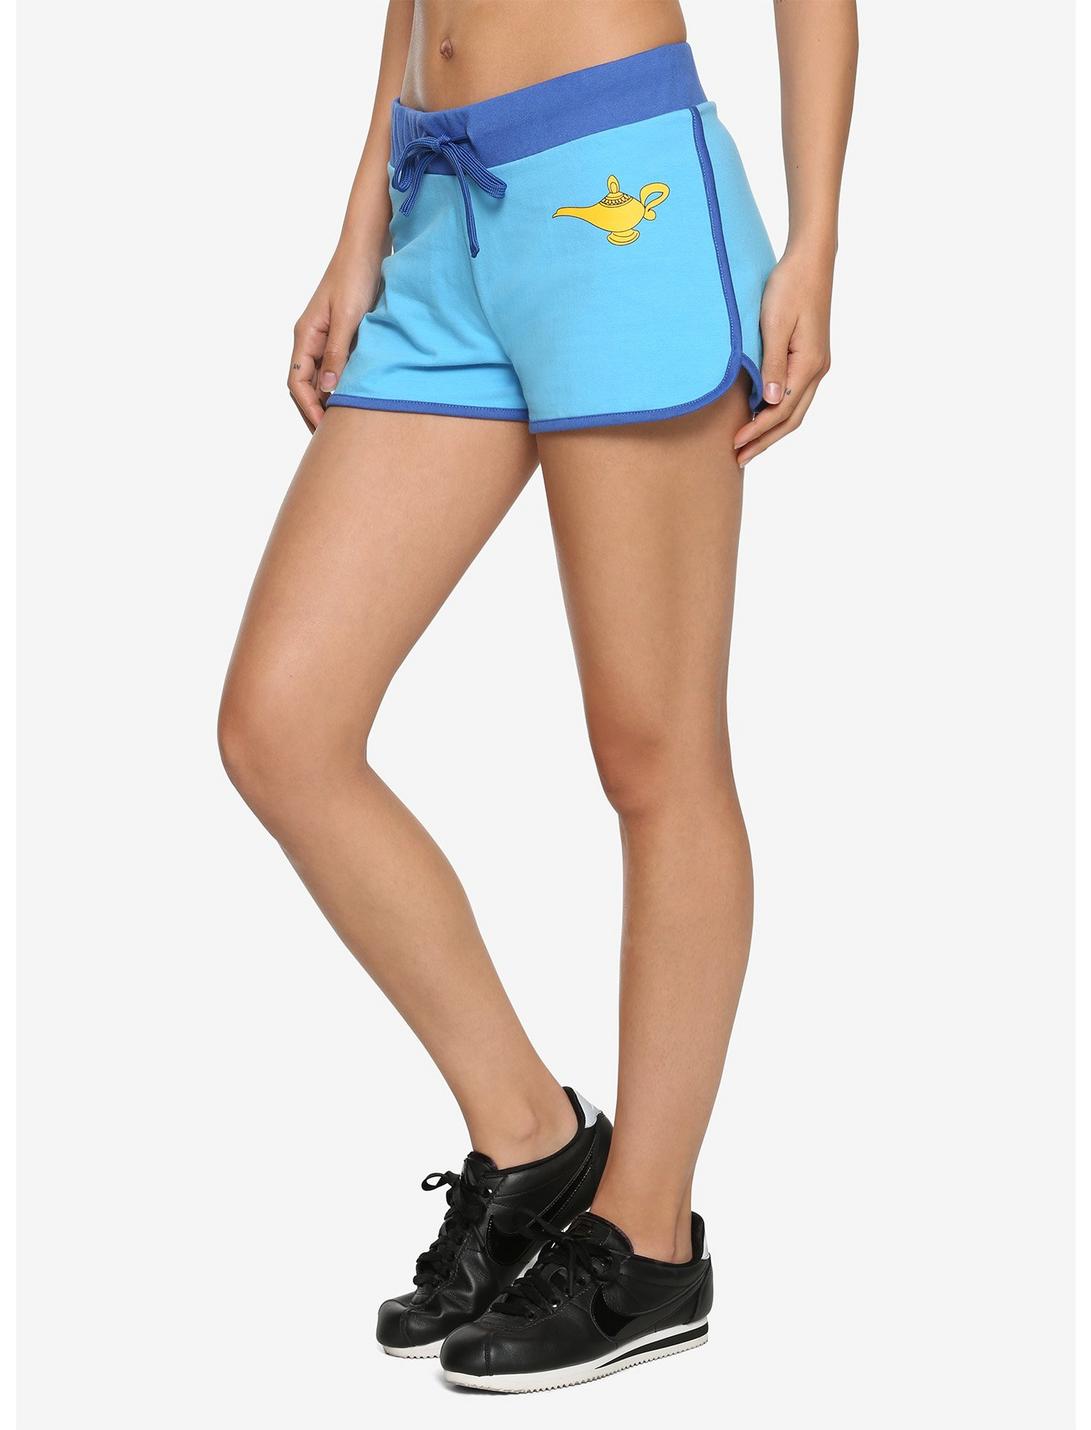 Disney Aladdin Genie Lamp Girls Soft Shorts, BLUE, hi-res